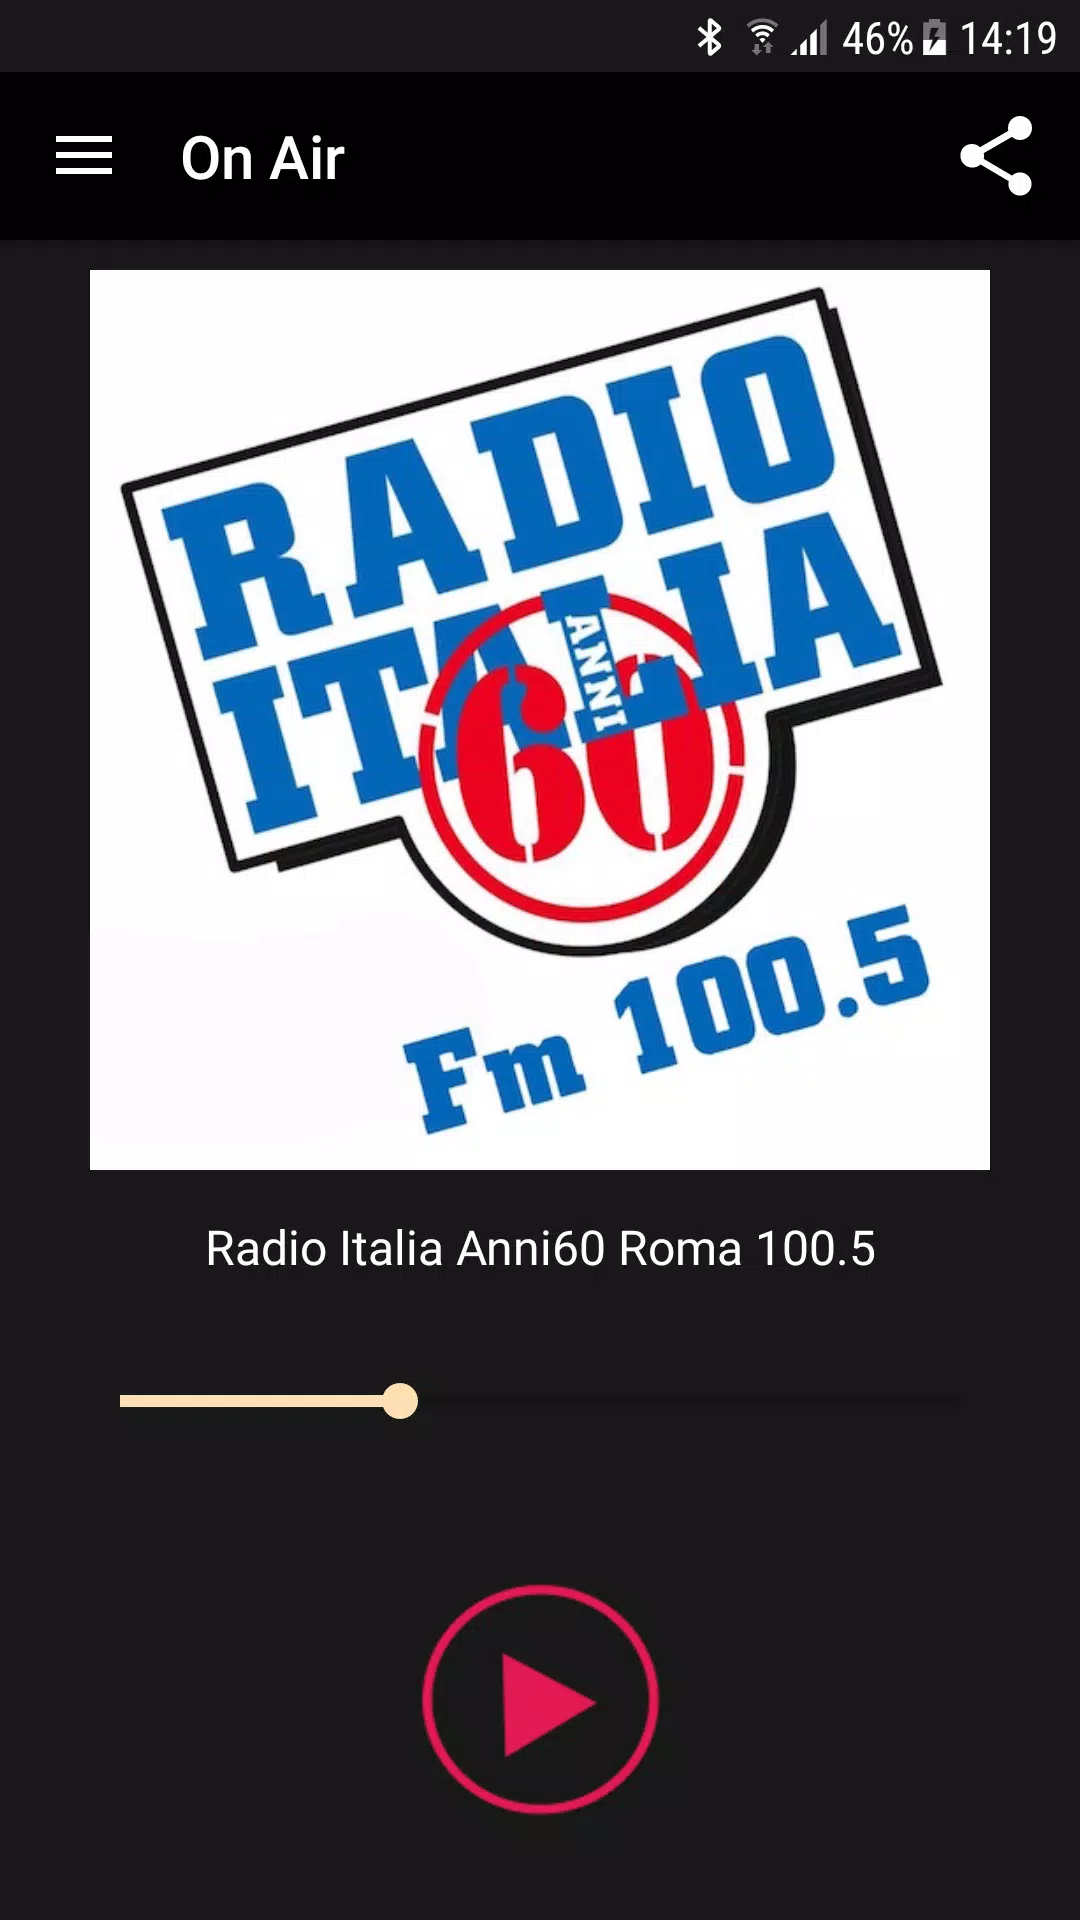 Radio Italia Anni 60 ROMA 100.5 for Android - APK Download